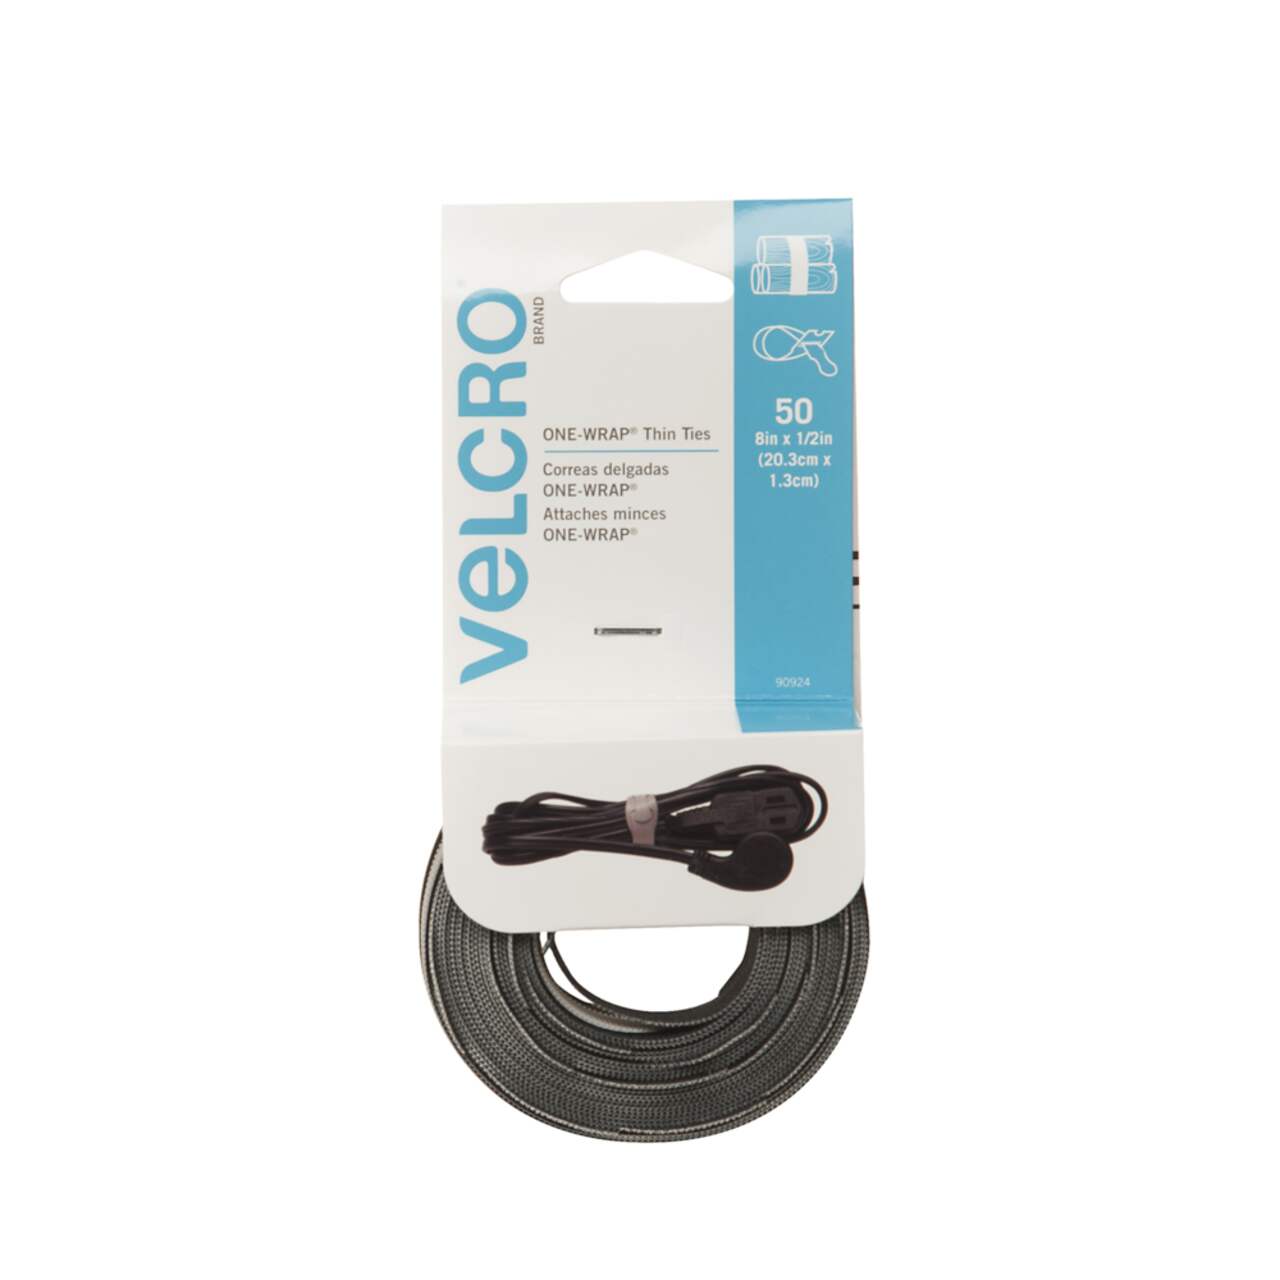 Velcro Brand Hook-and-Loop Cable Tie,8 in,Black,PK900 170091 